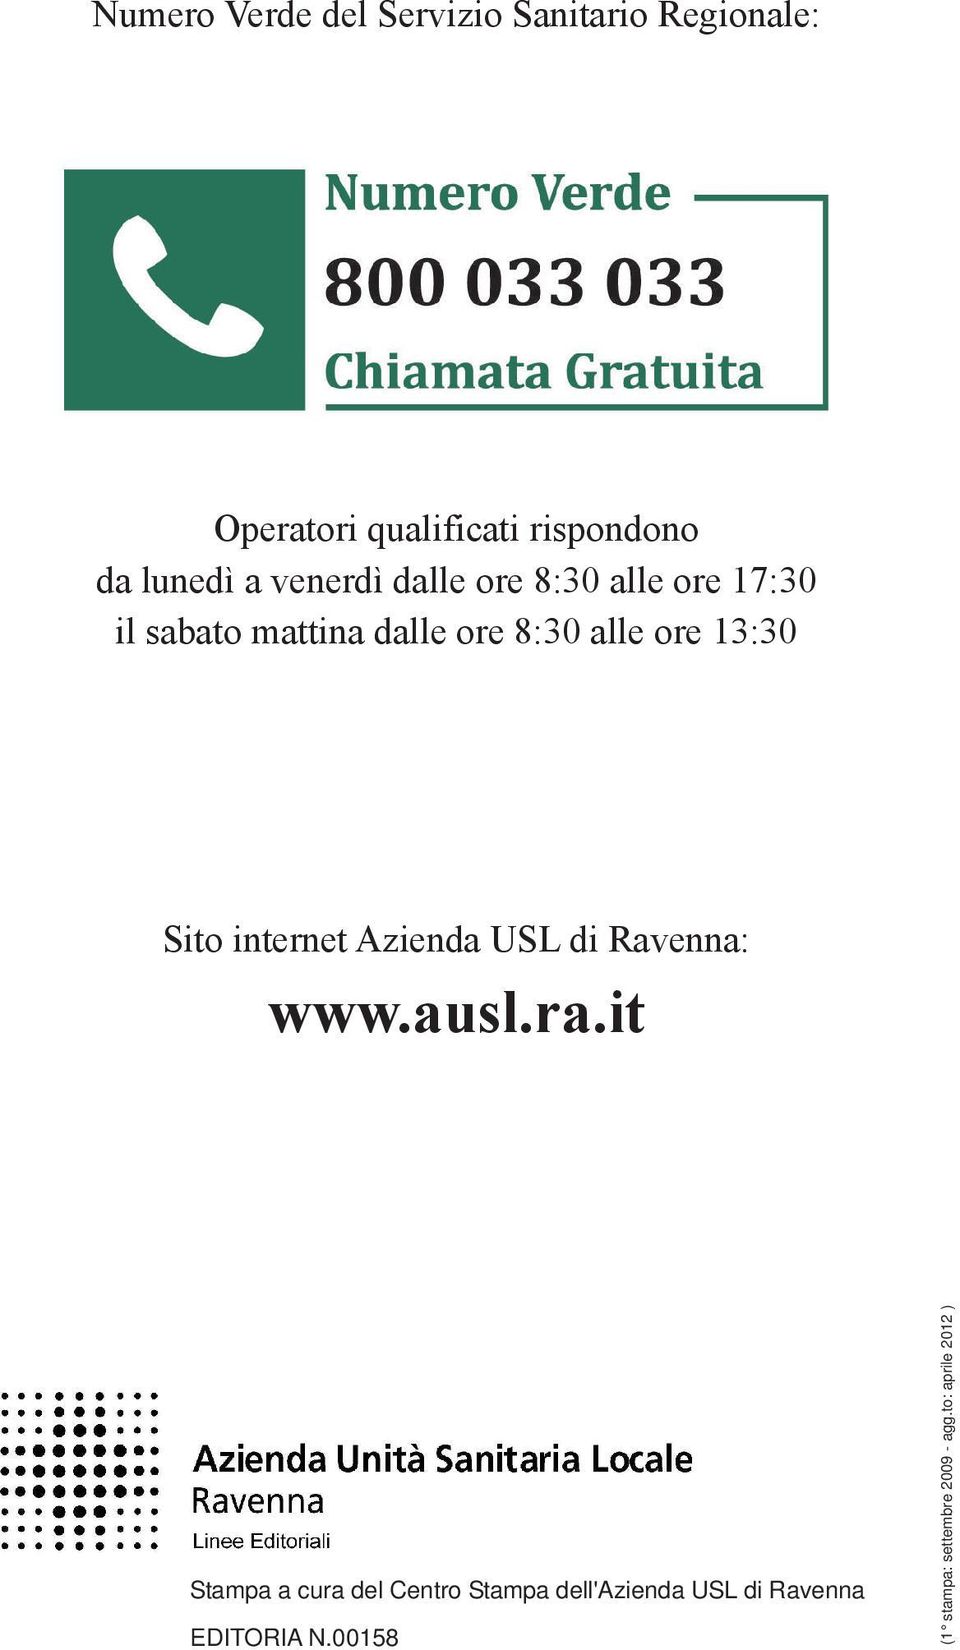 Sito internet Azienda USL di Ravenna: www.ausl.ra.